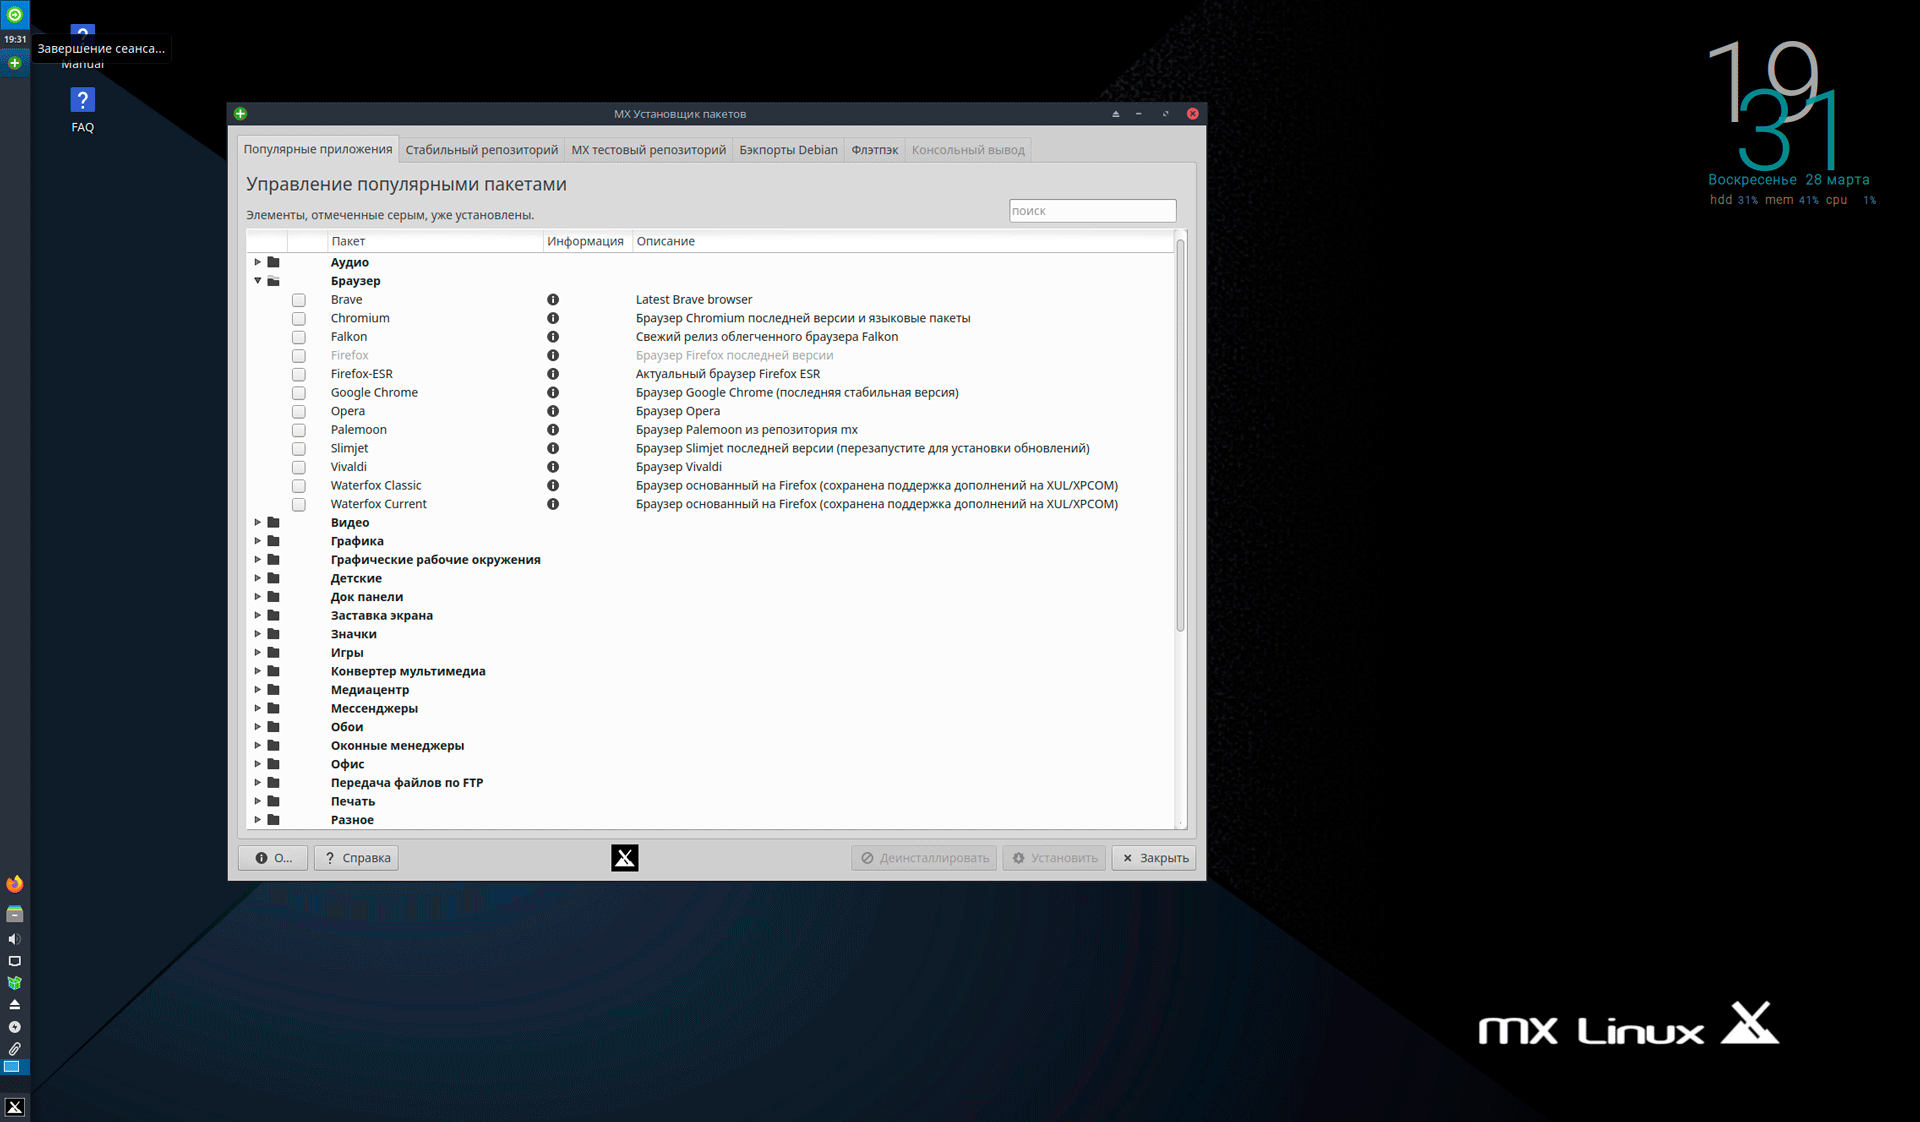 https://interface31.ru/tech_it/images/MX-Linux-19.3-008.png